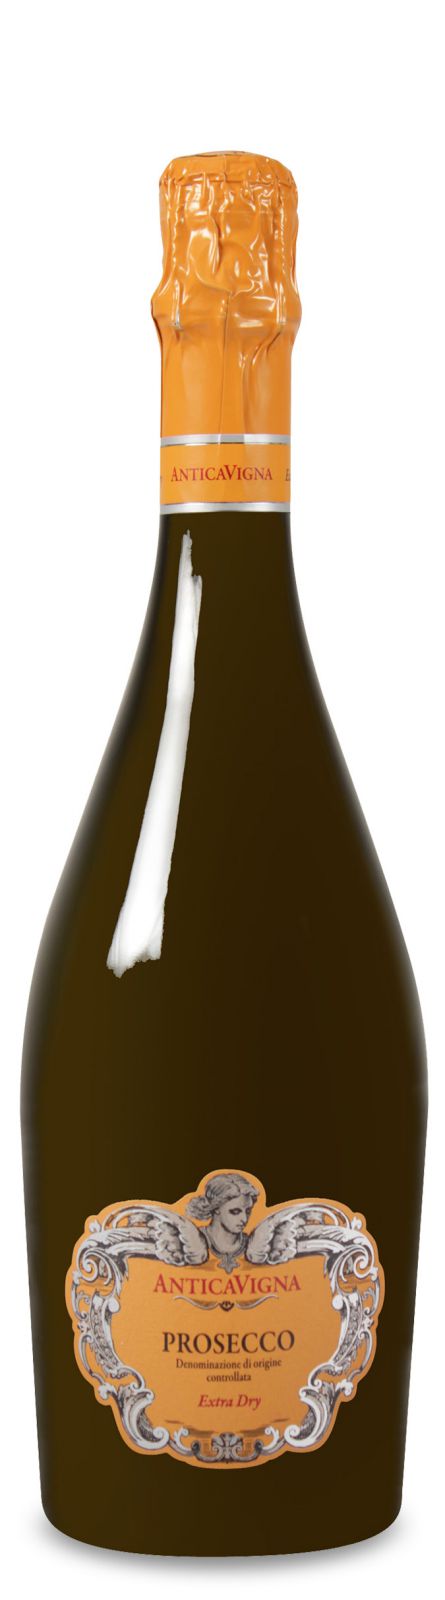 antica-vigna-prosecco-doc-extra-dry_bottle-500x500.jpg